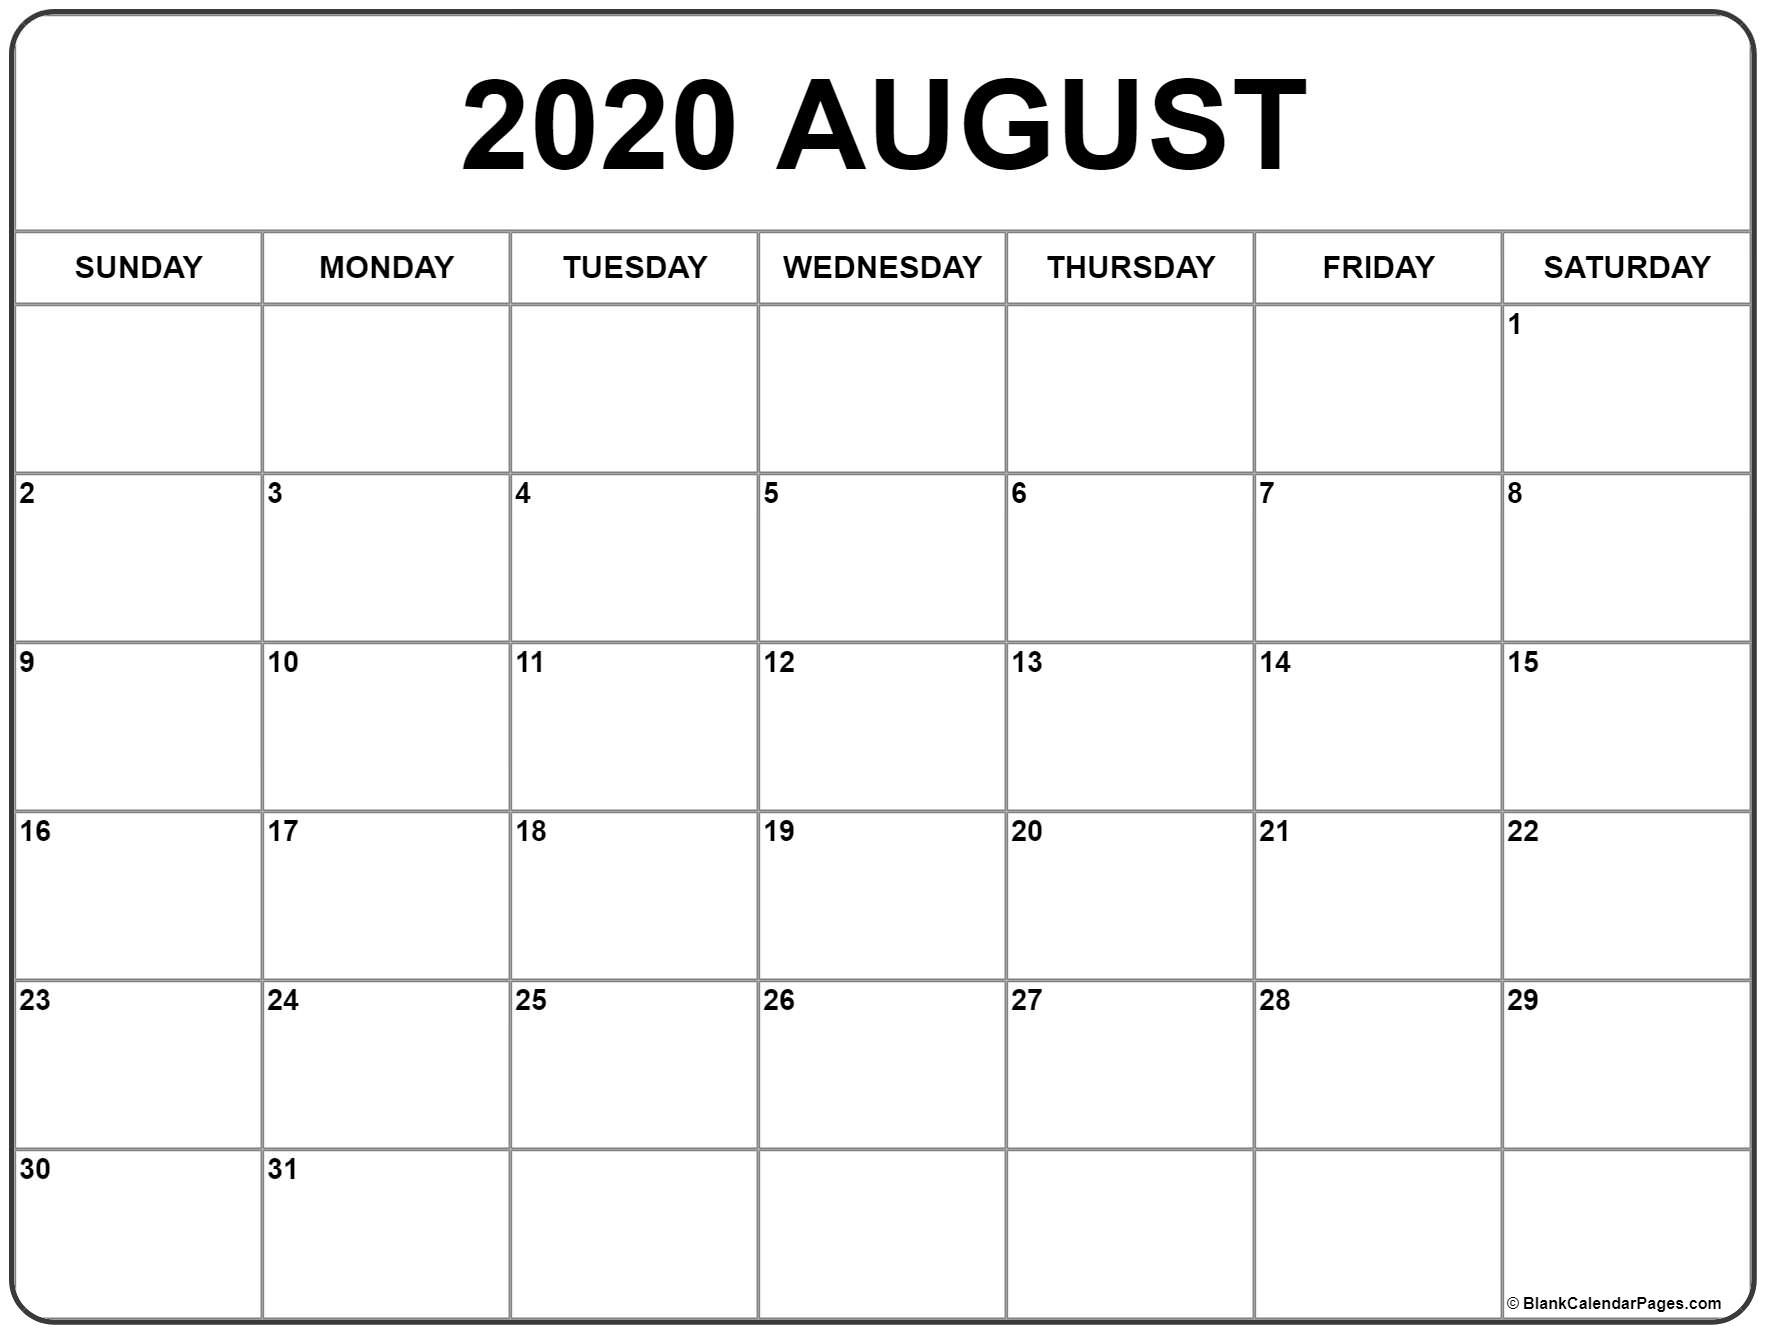 August 2020 Calendar | Free Printable Monthly Calendars  Small August 2020 Calendar